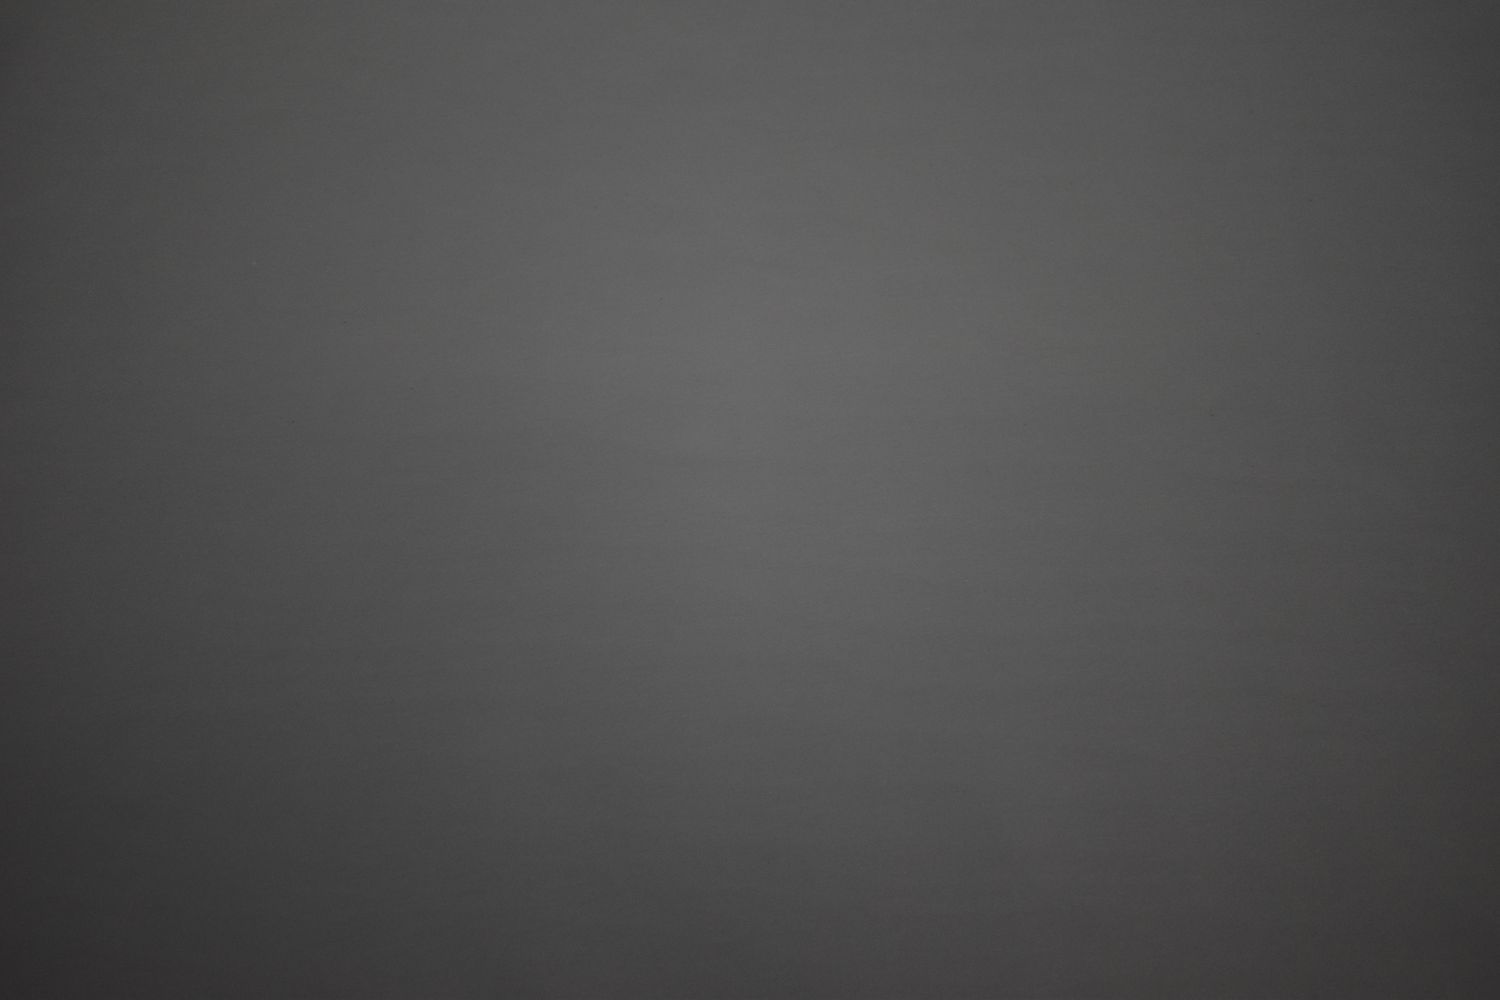 Бифлекс матовый серого цвета W-125071